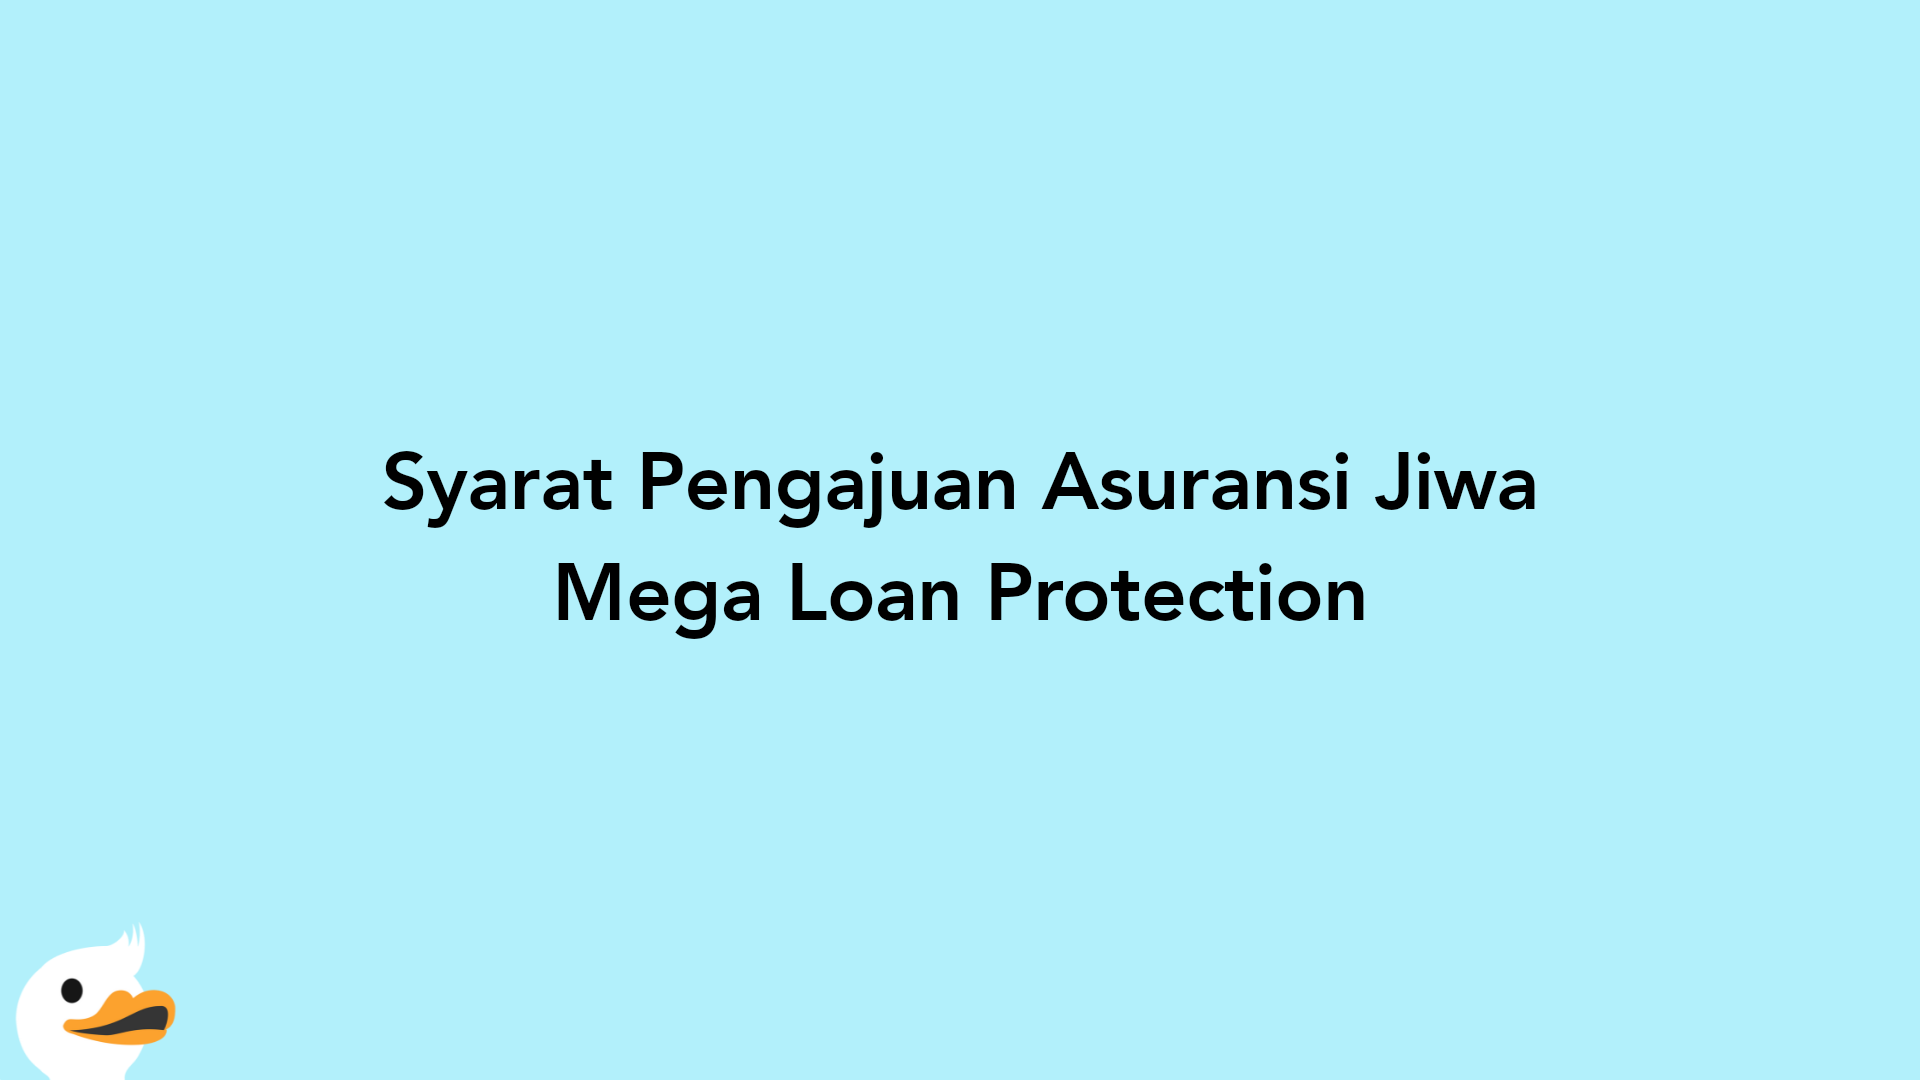 Syarat Pengajuan Asuransi Jiwa Mega Loan Protection